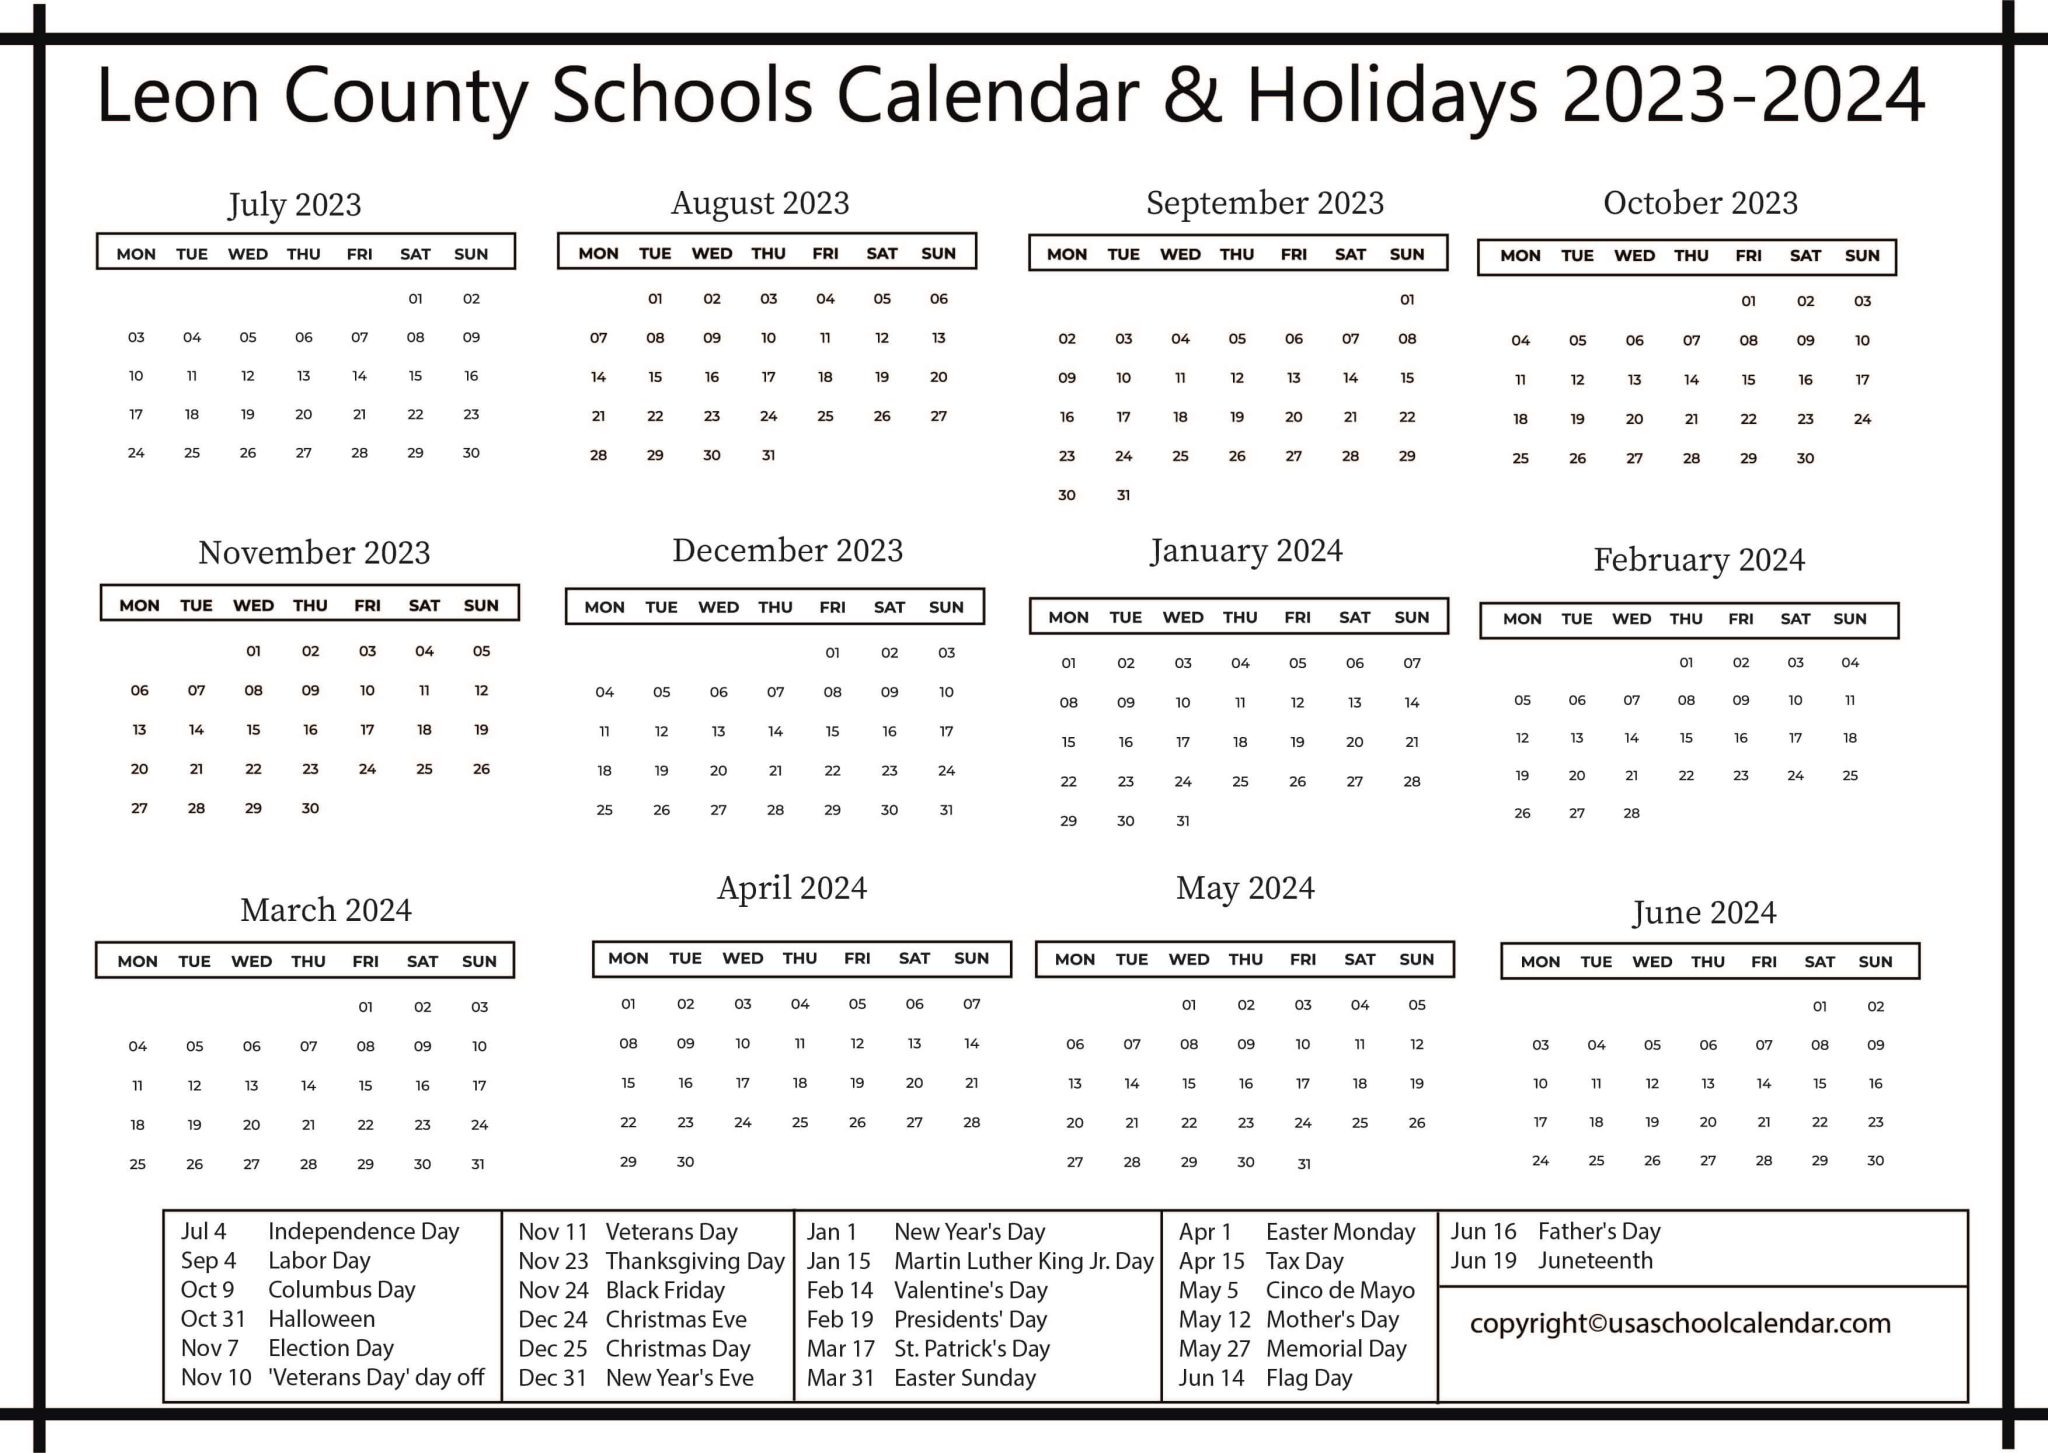 Leon County Schools Calendar & Holidays 2023-2024